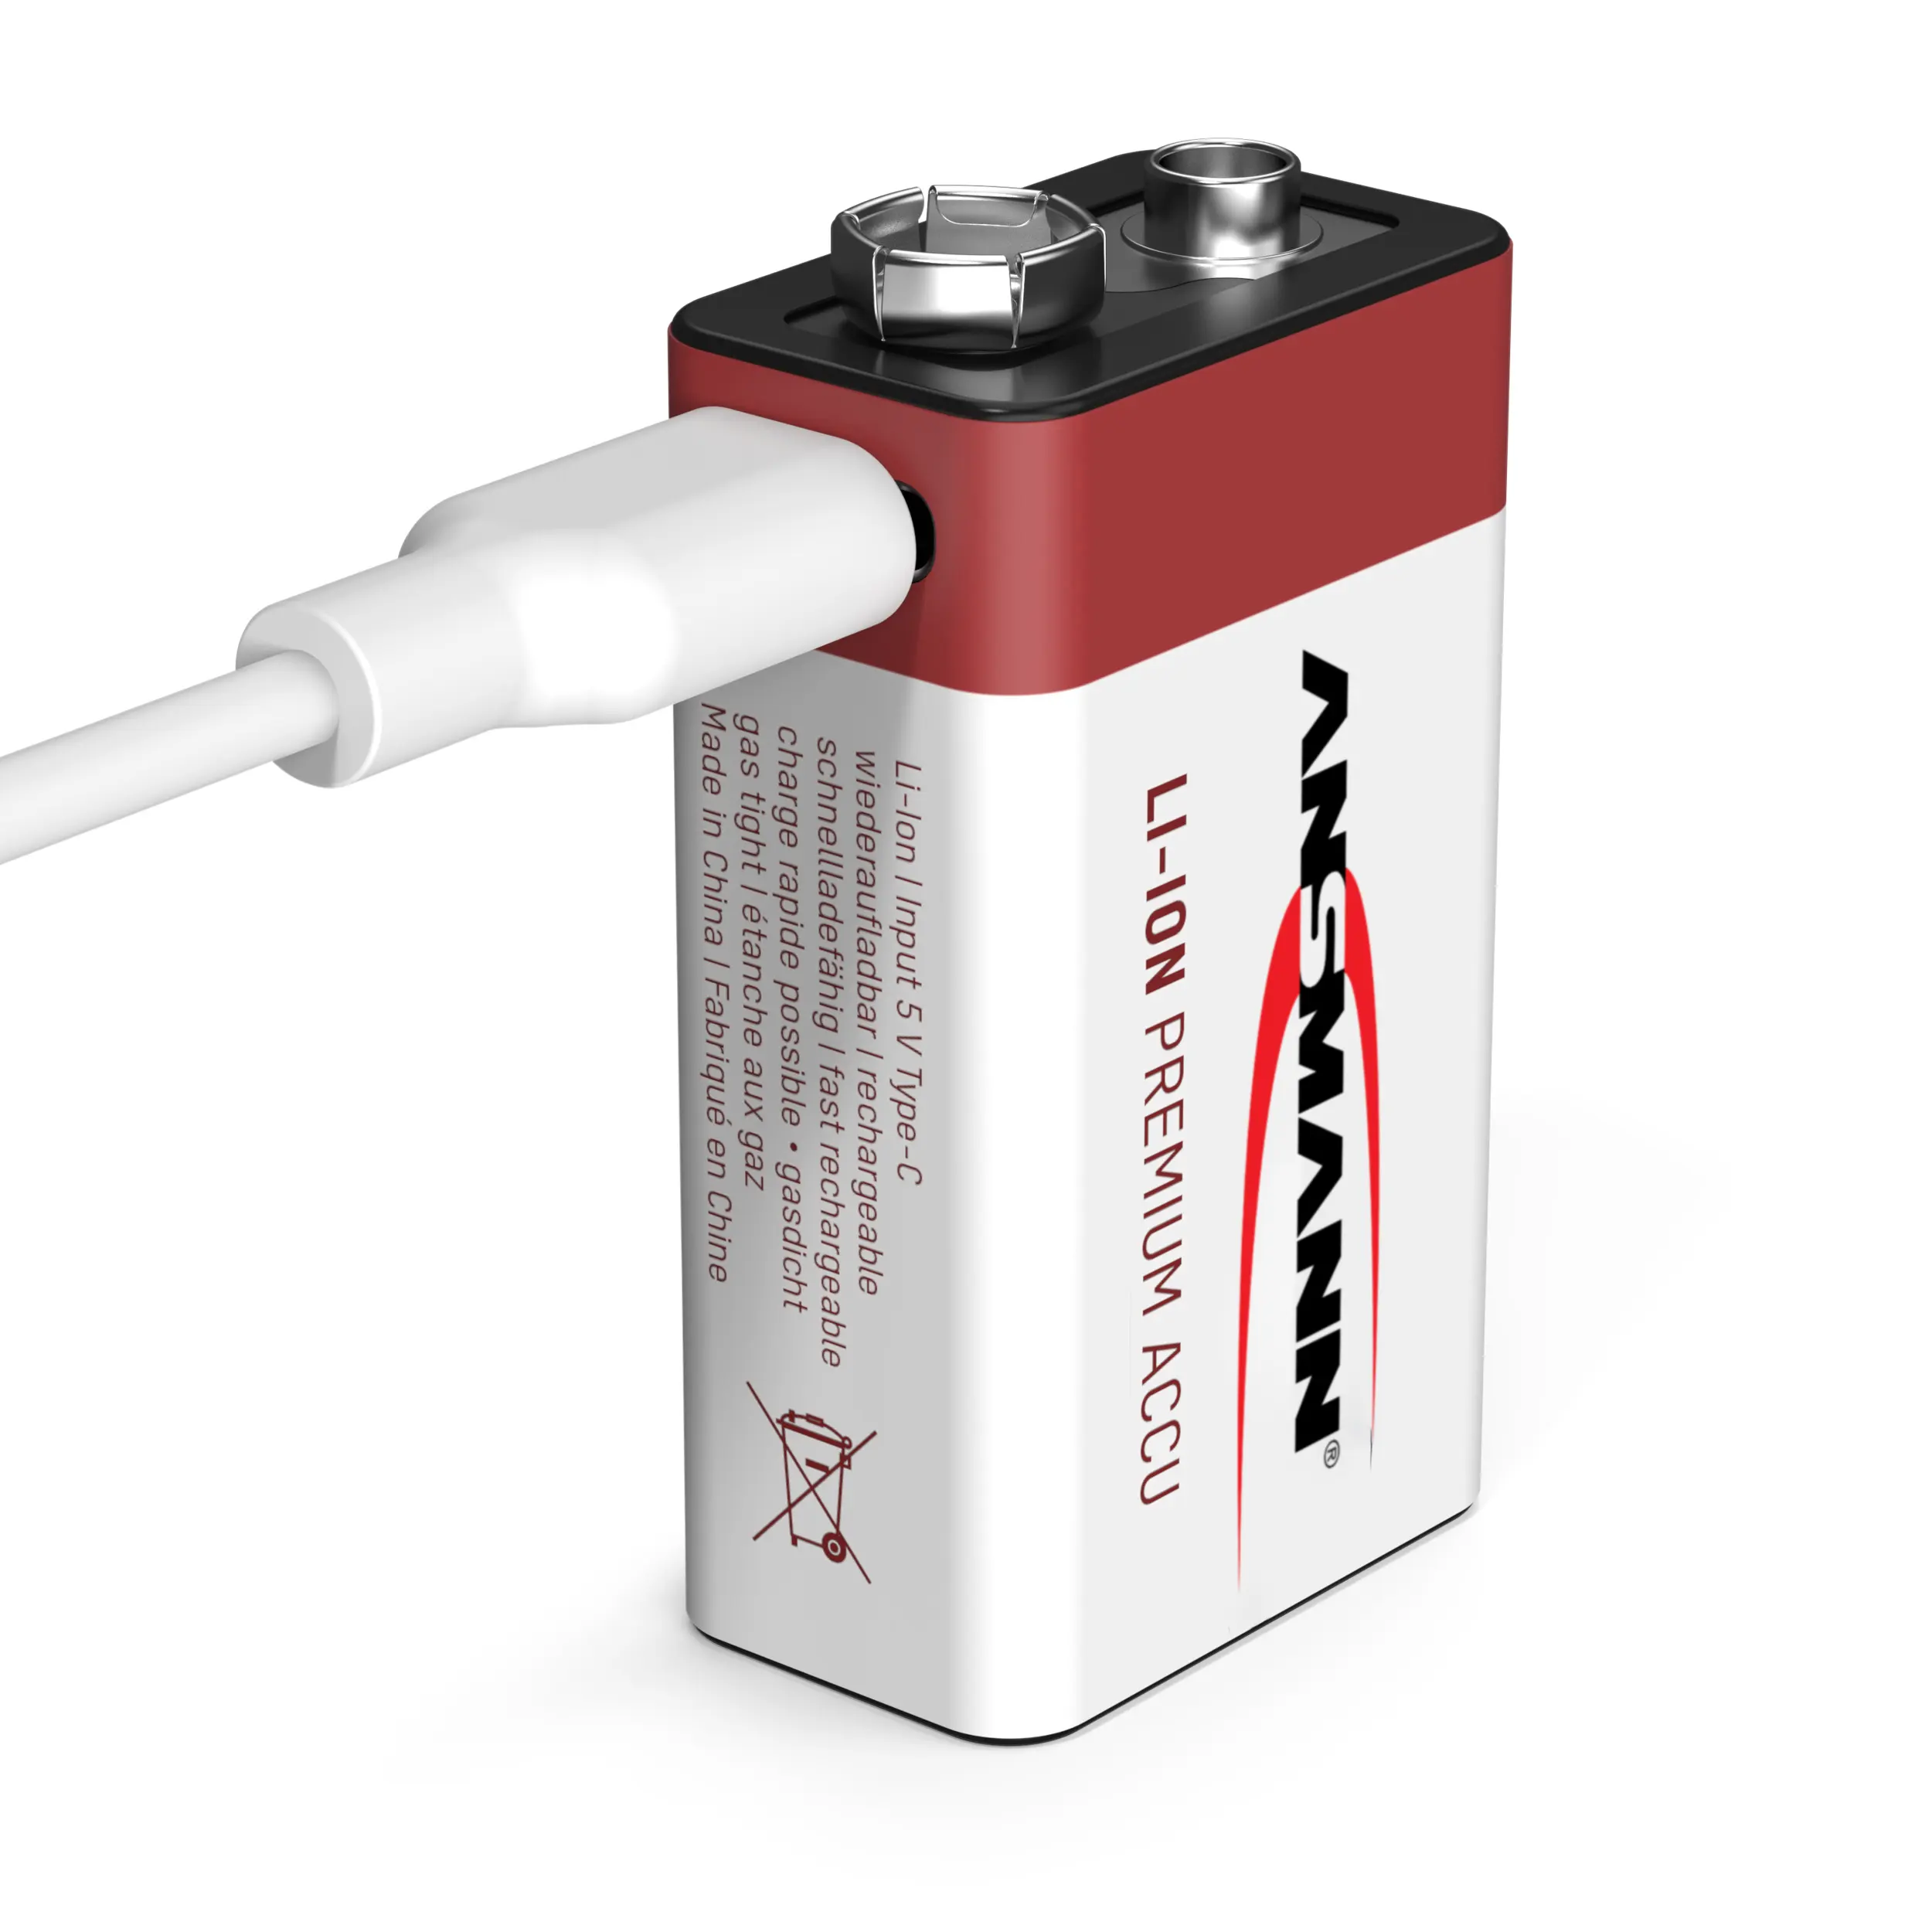 Baterai USB paling populer penjualan terbaik baterai kering Lithium ion isi ulang baterai 9V